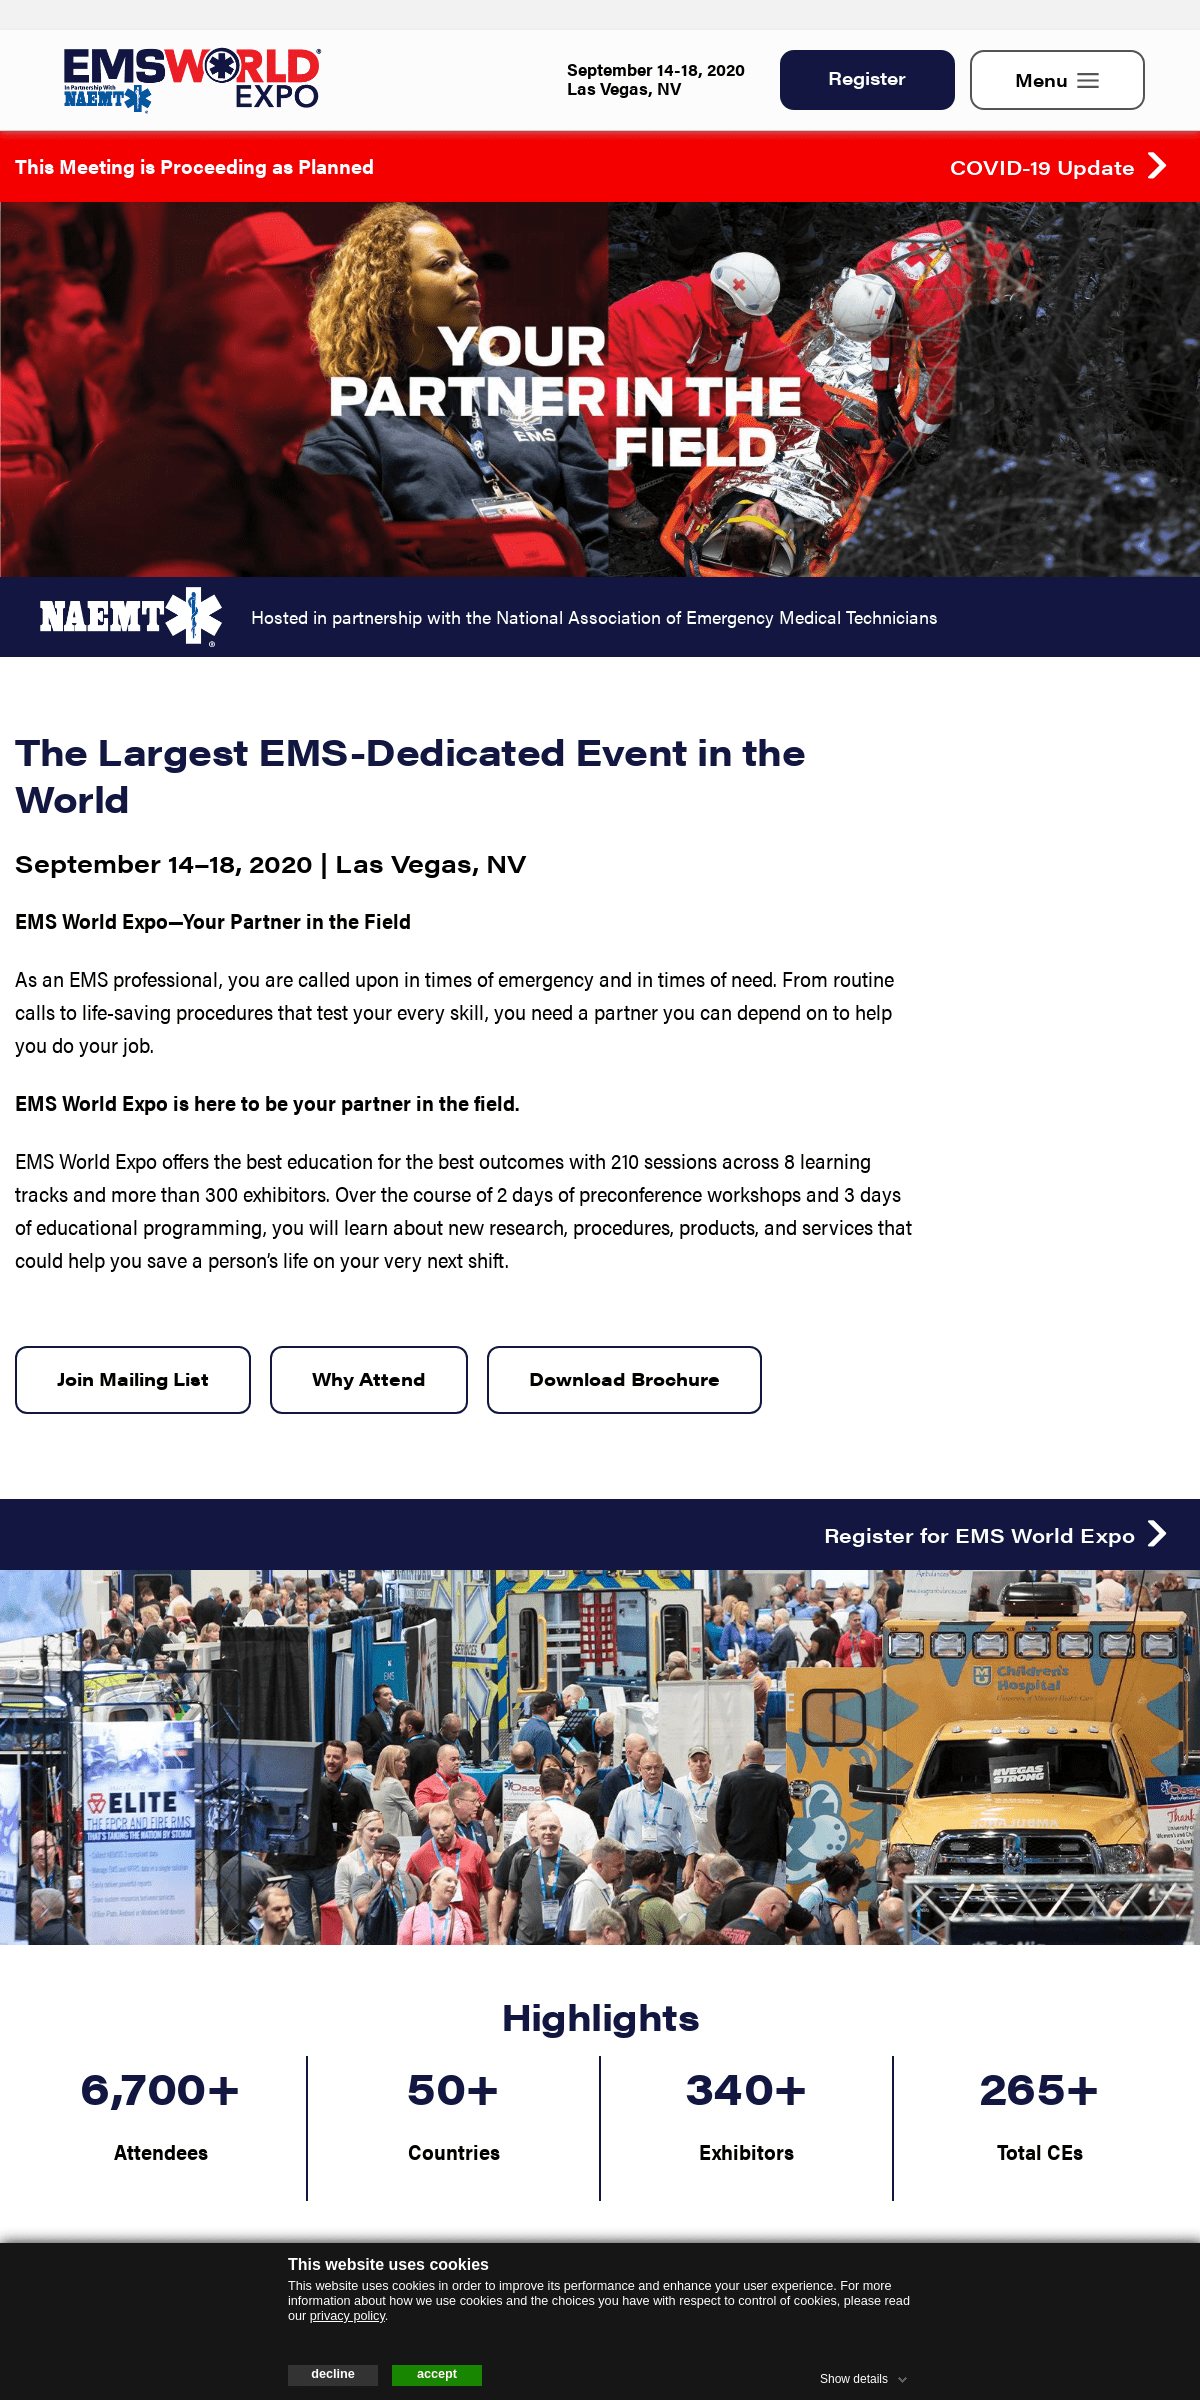 A complete backup of emsworldexpo.com